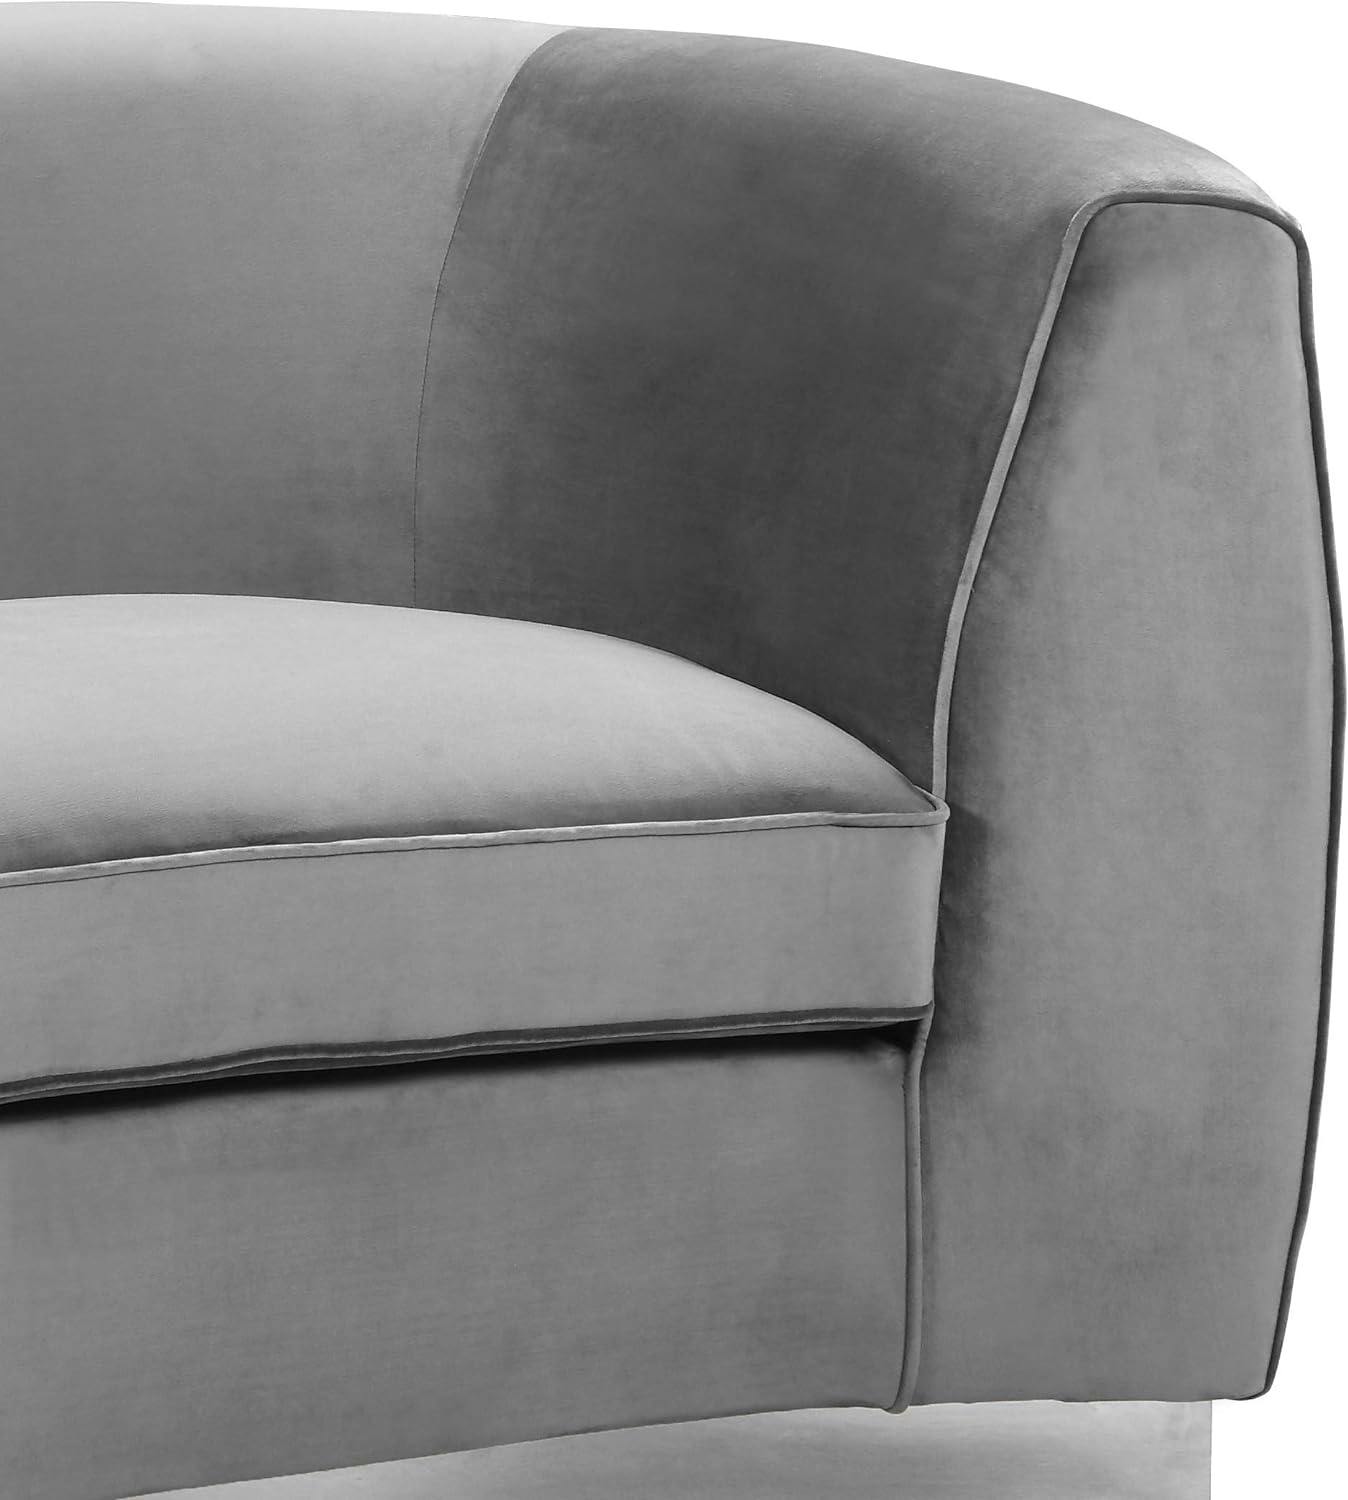 Elegant Gray Velvet Barrel Accent Chair with Wood Frame